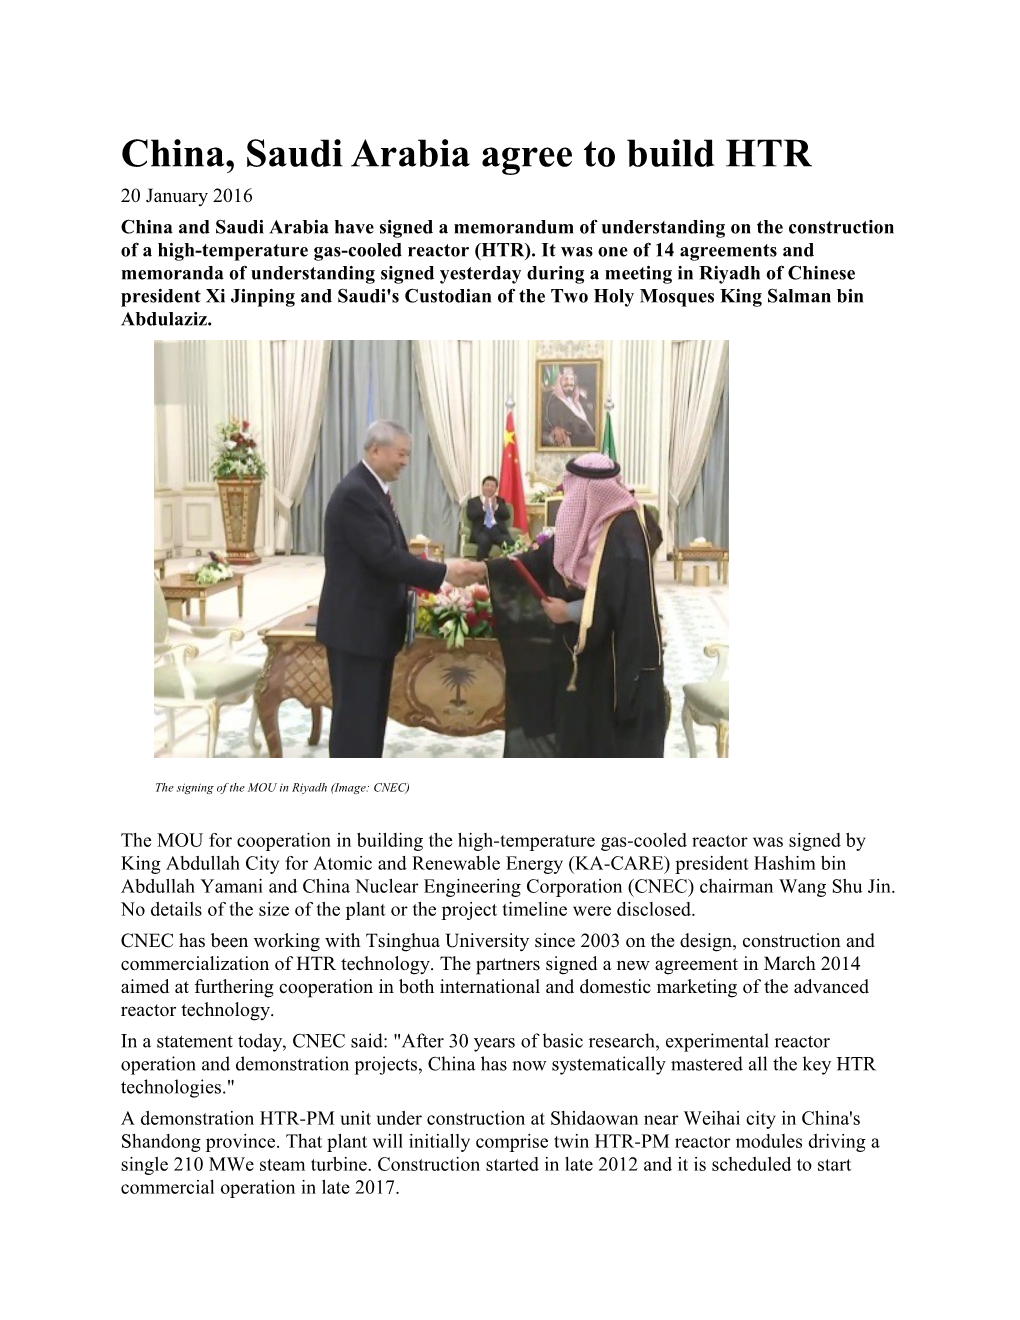 China, Saudi Arabia Agree to Build HTR